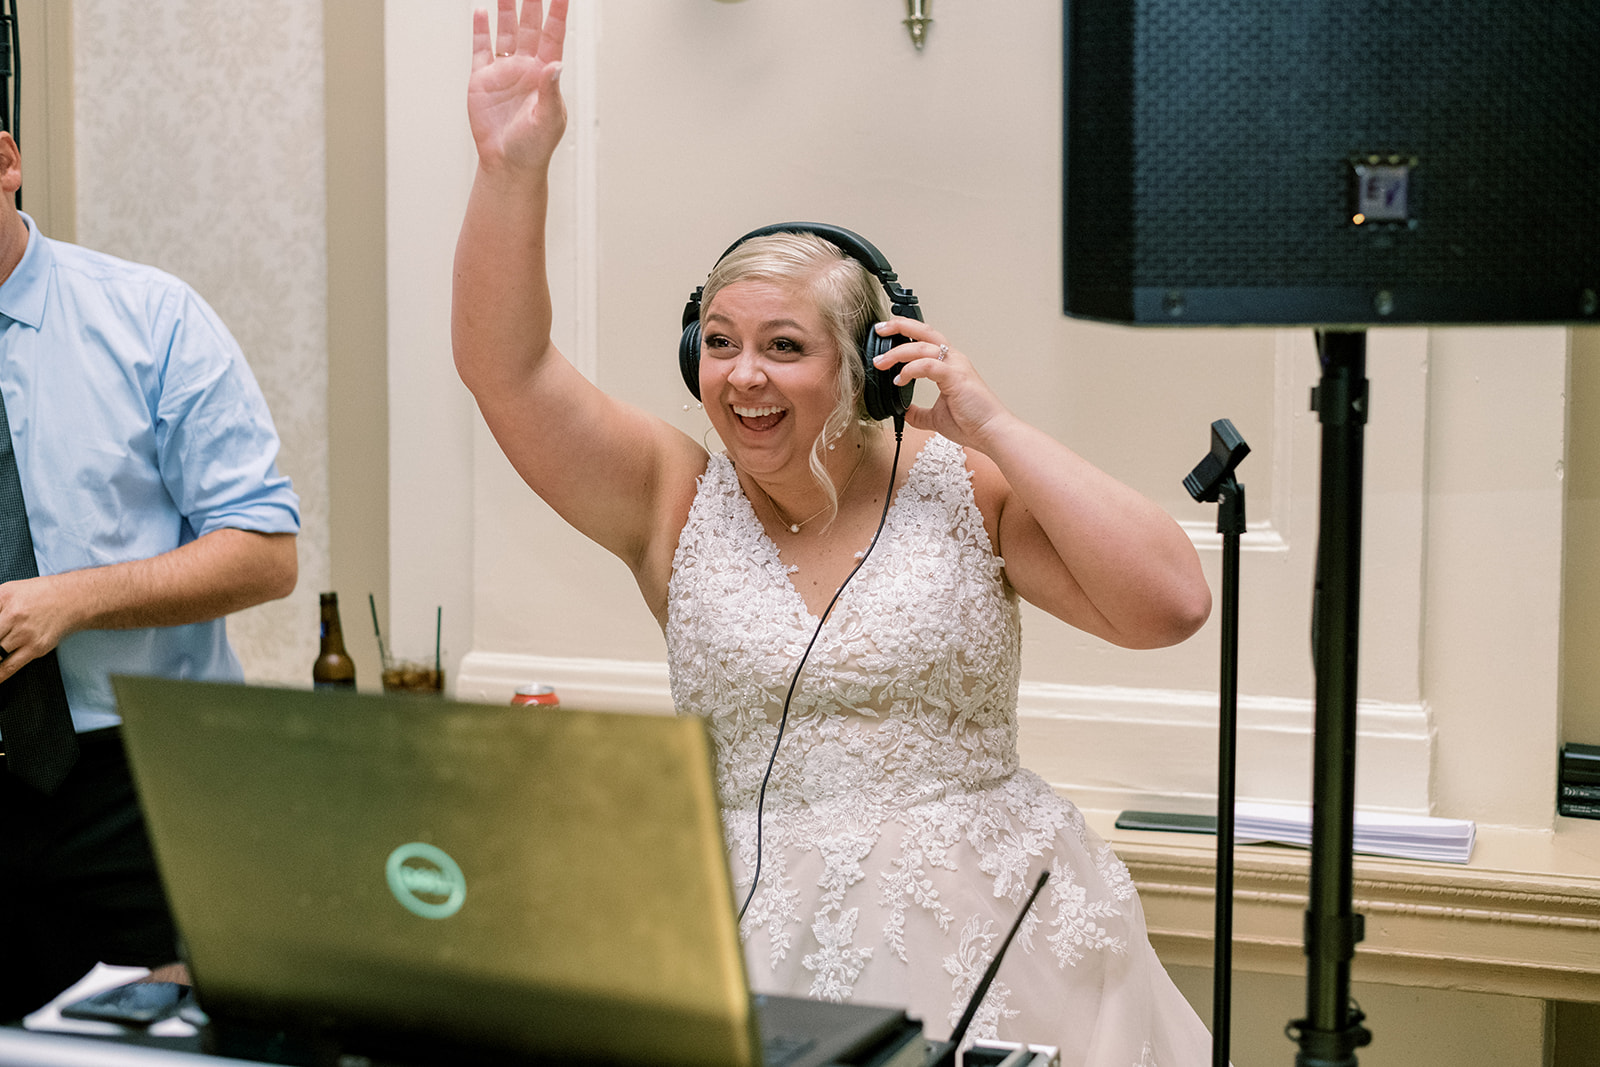 Pennsylvania wedding photographer captures bride wearing dj headphones during reception